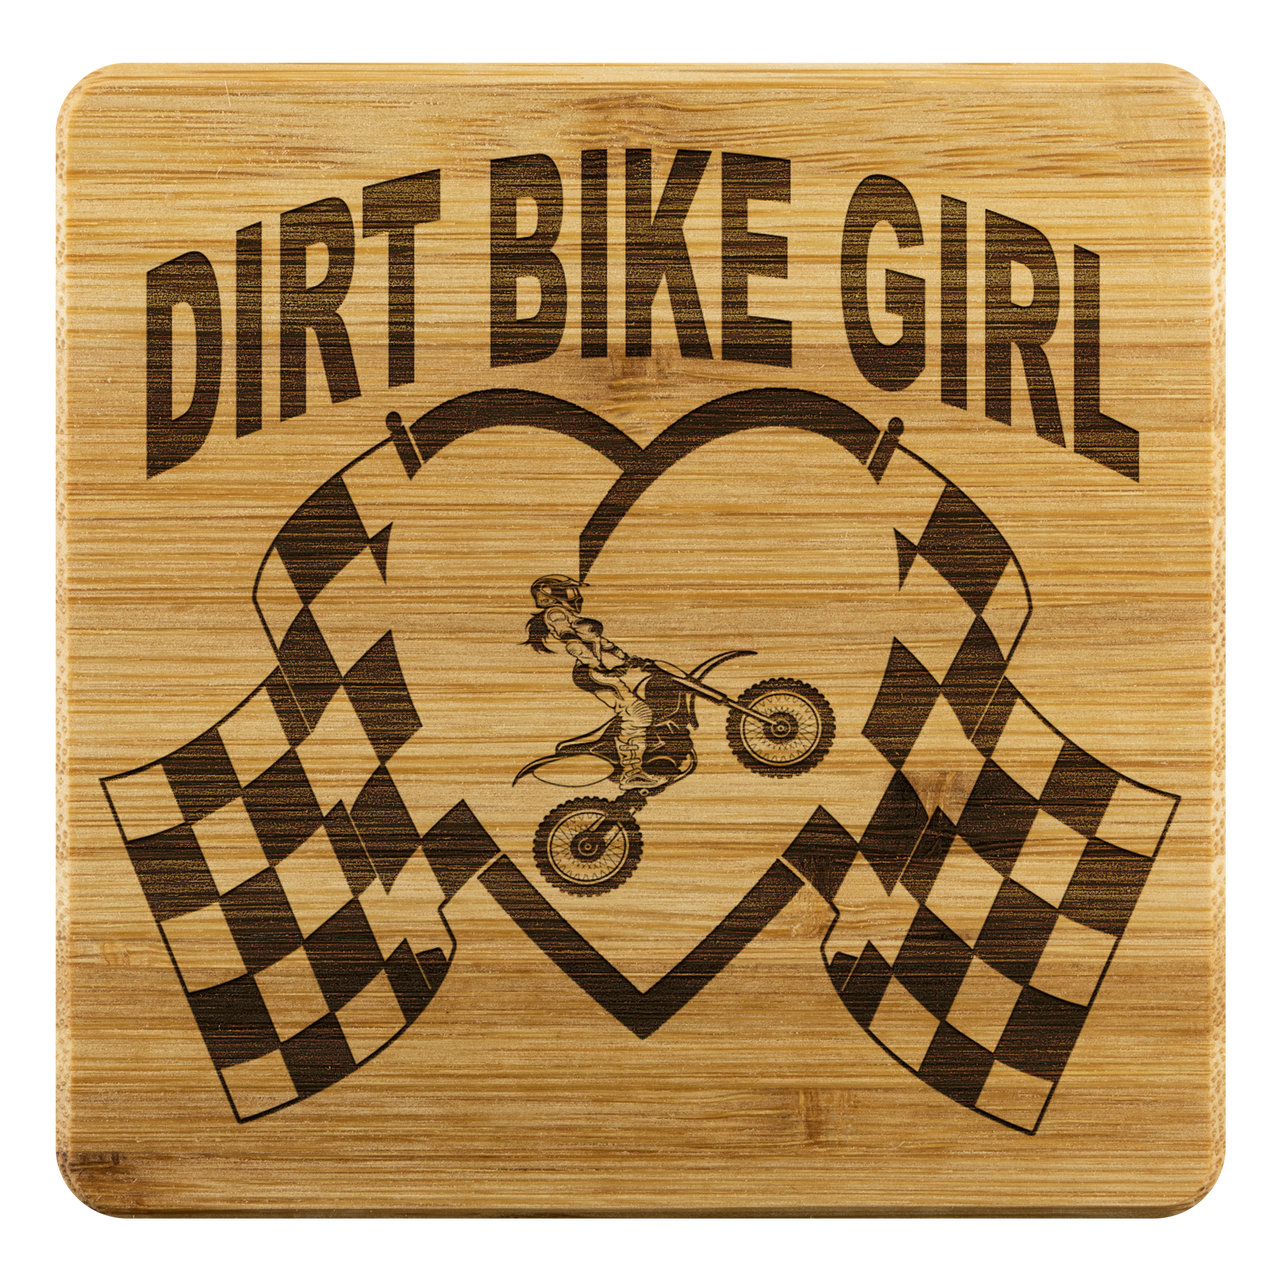 Dirt Bike Girl Bamboo Coaster